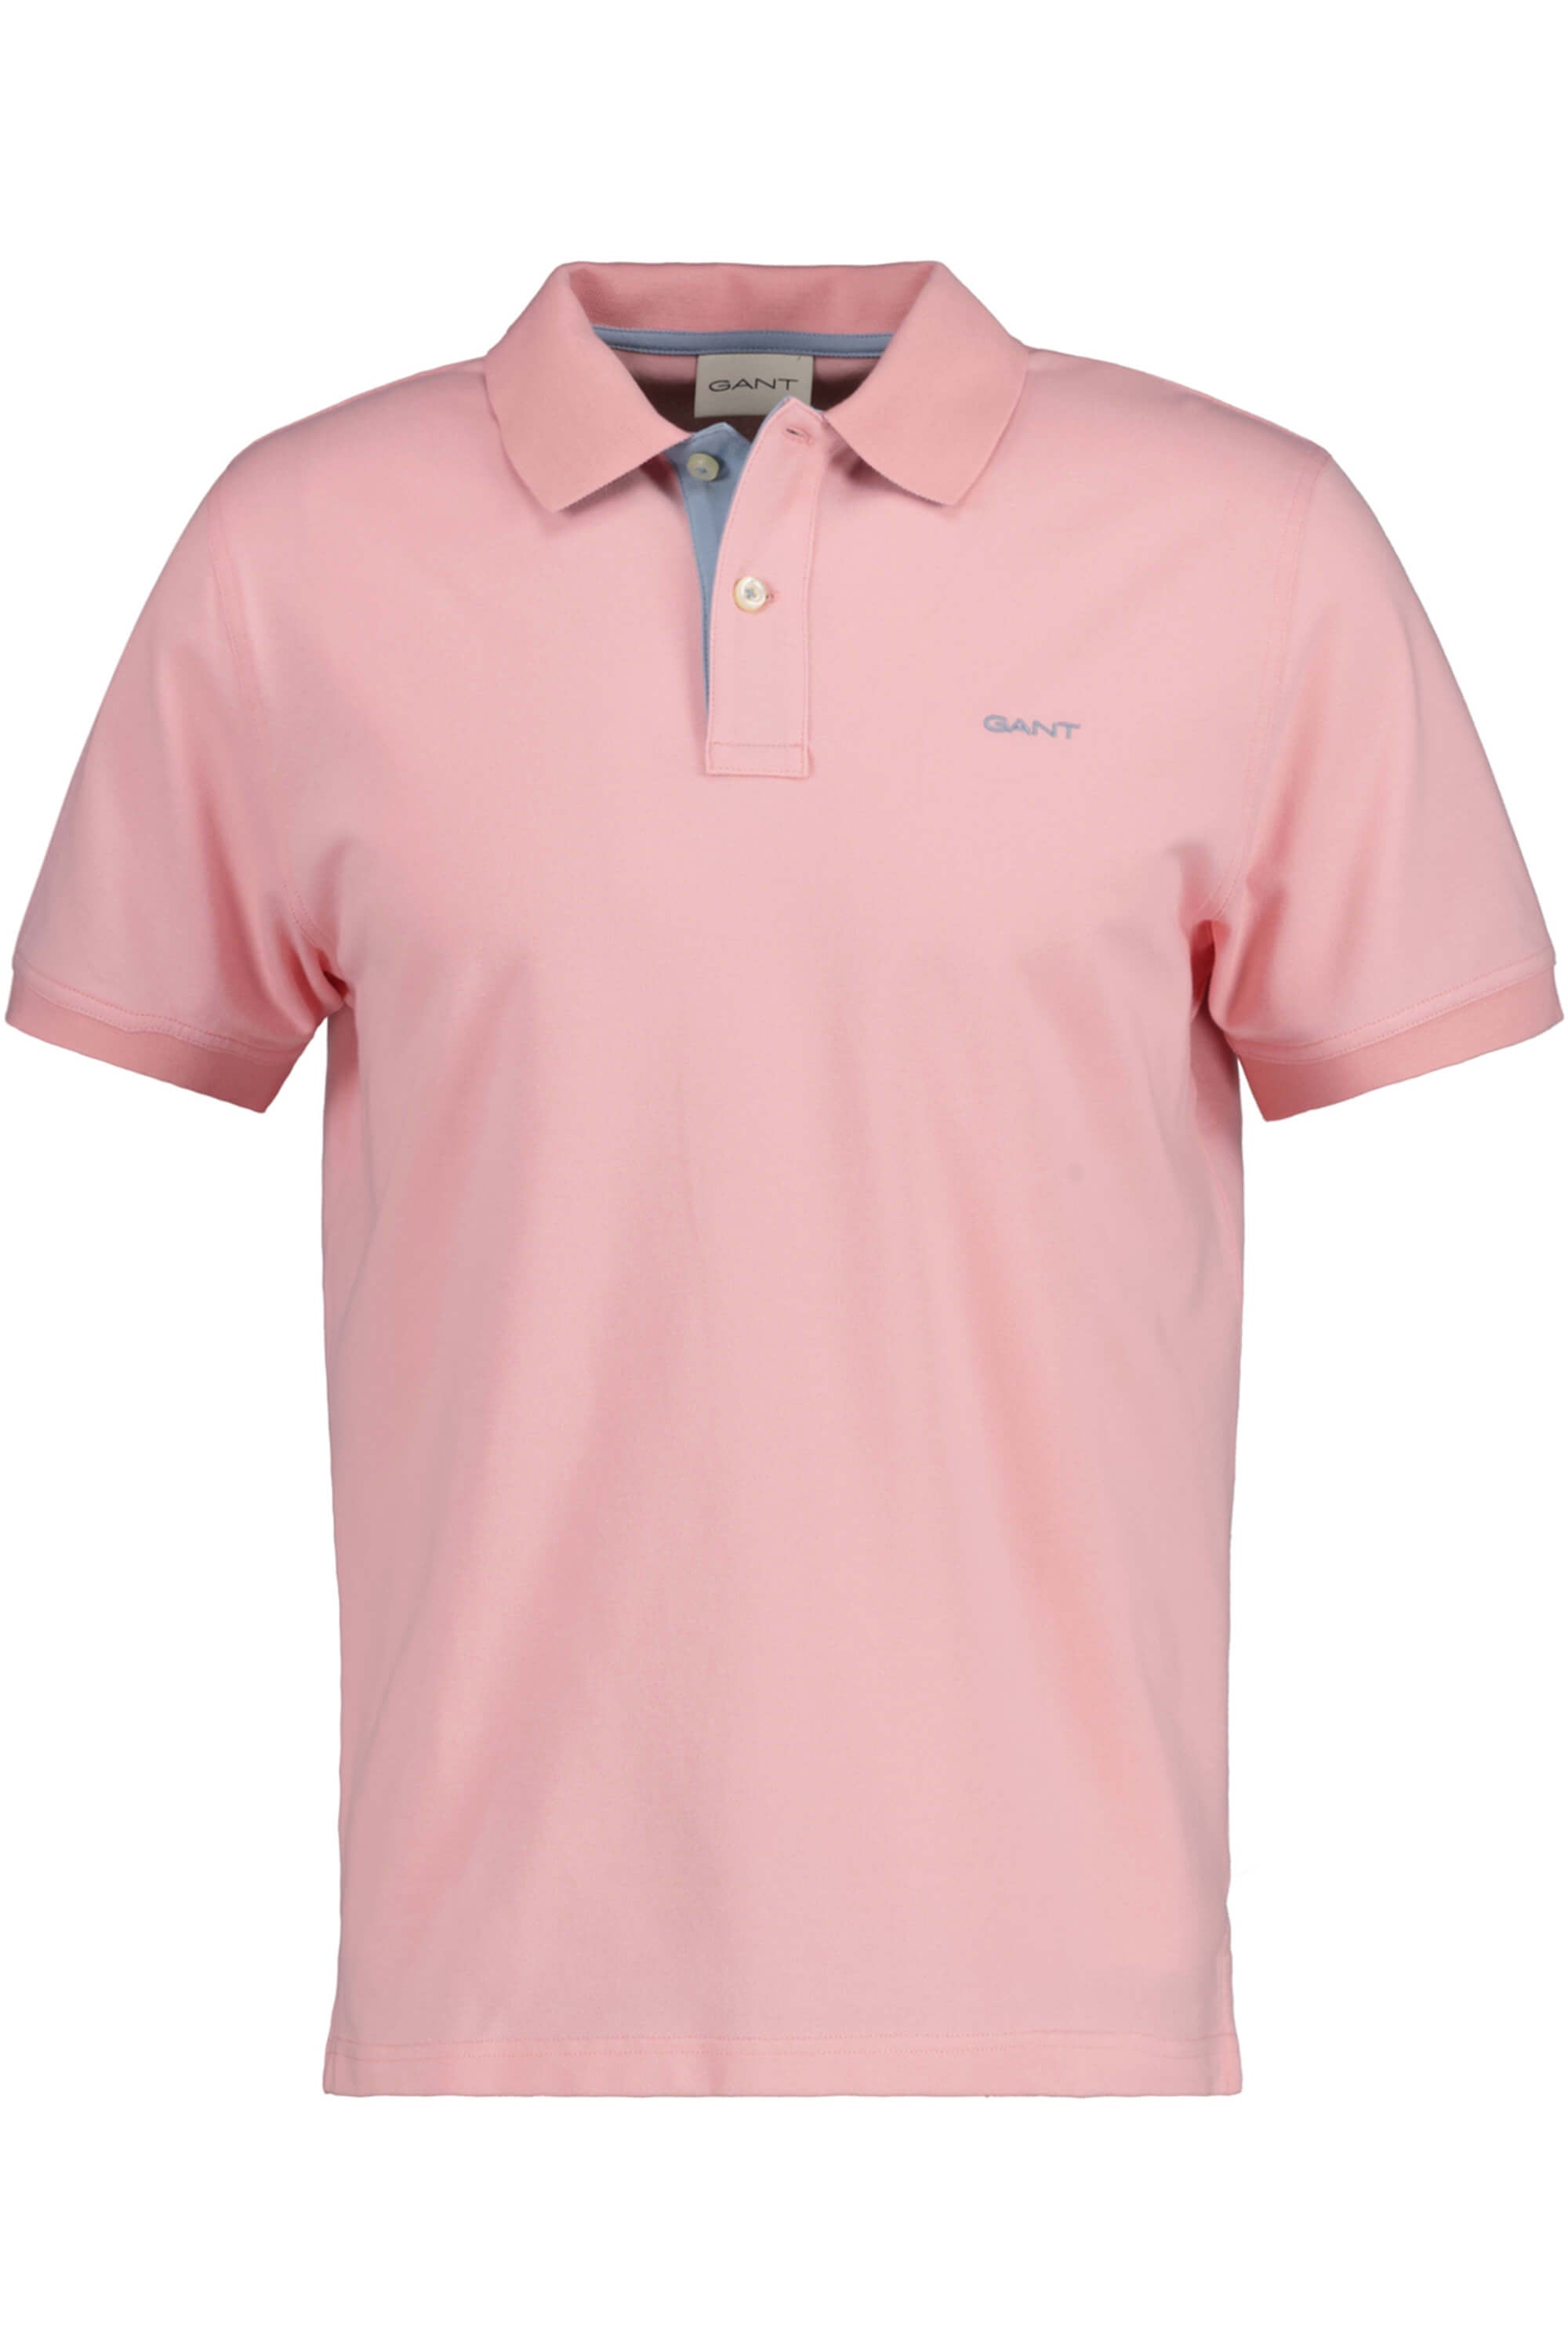 Gant Contrast Collar Polo Bubblegum Pink